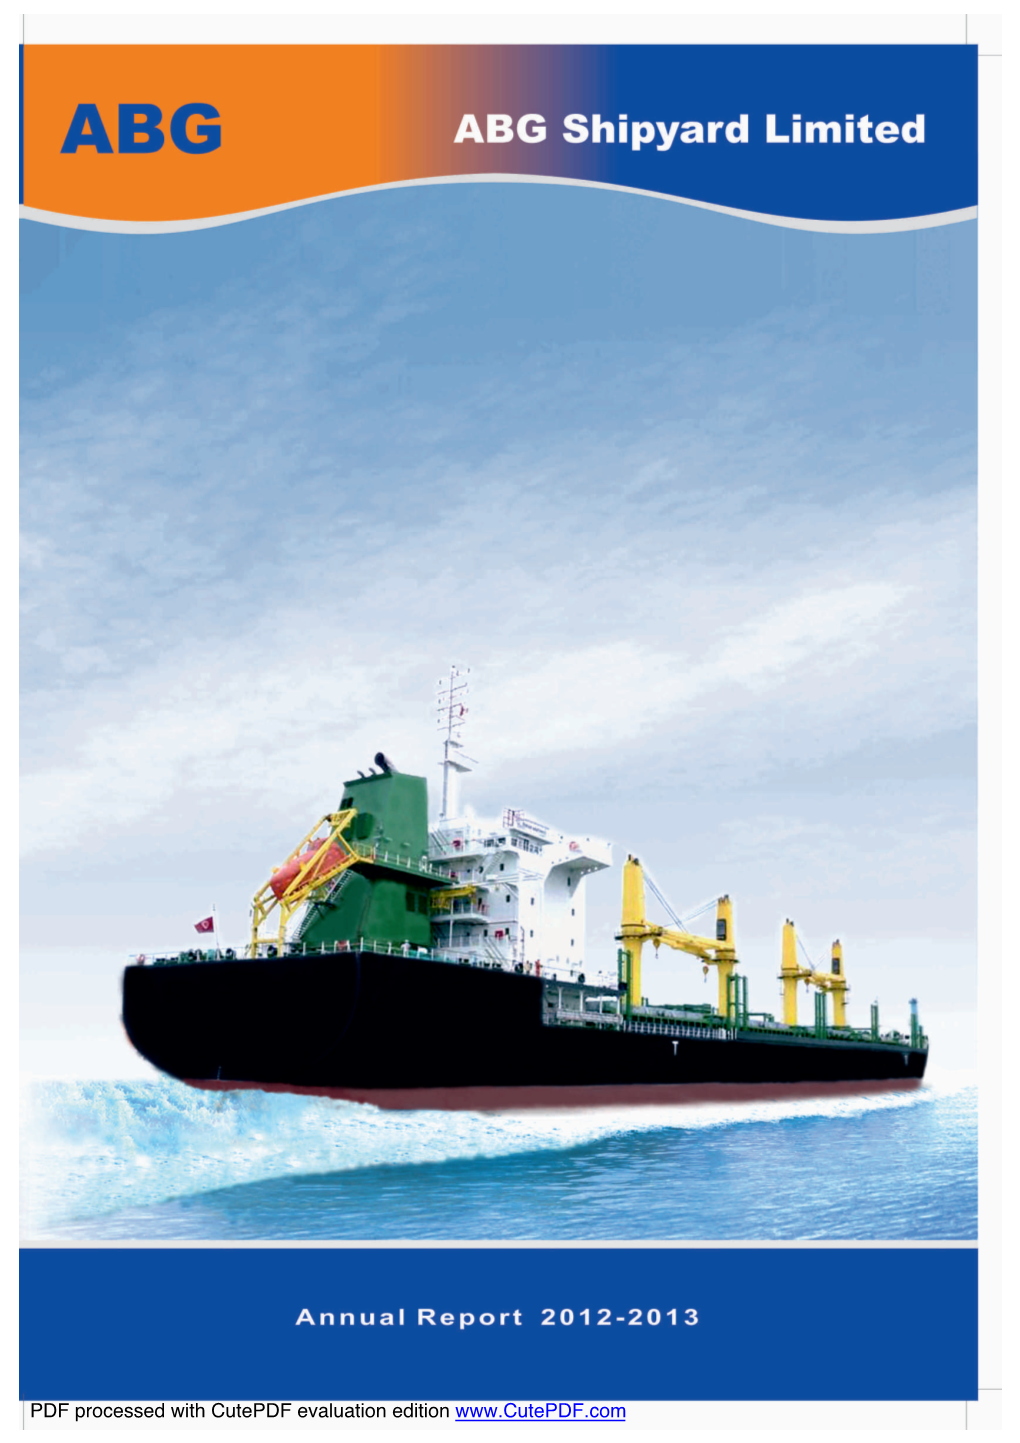 ABG Shipyard Limited Annual Report 2012-2013